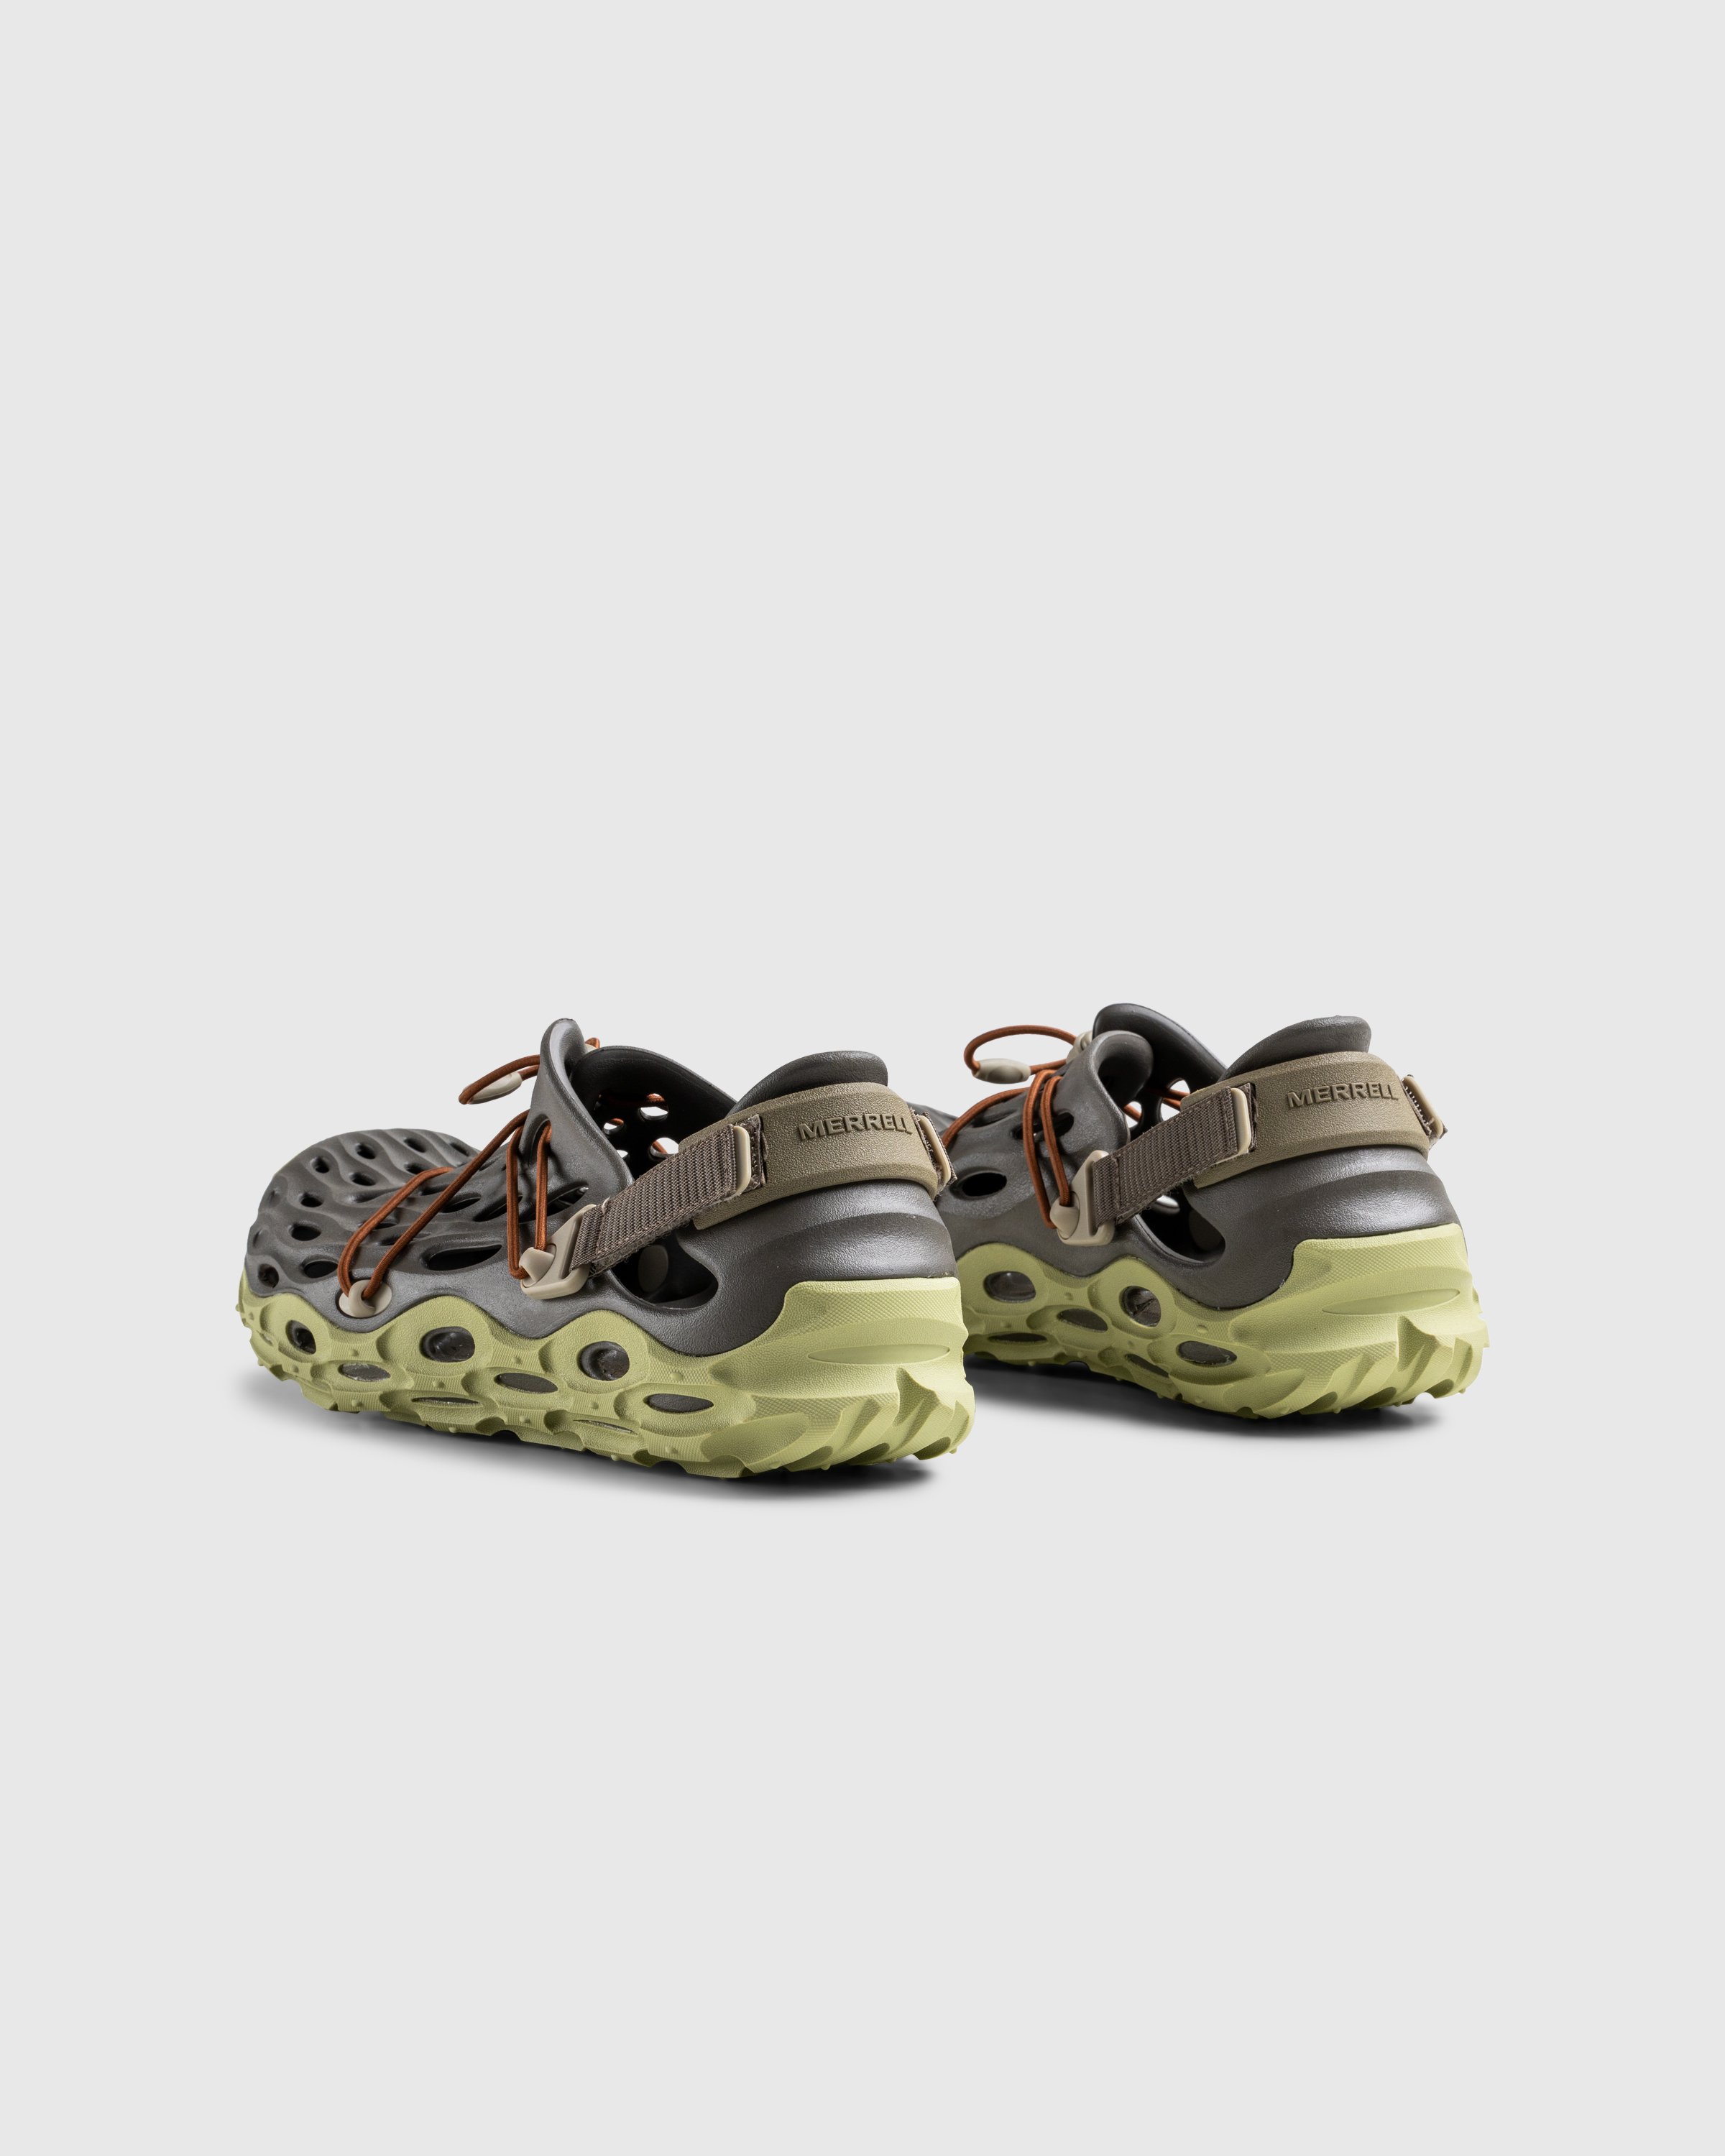 Merrell - HYDRO MOC AT CAGE SE/BOULDER - Footwear - Green - Image 4